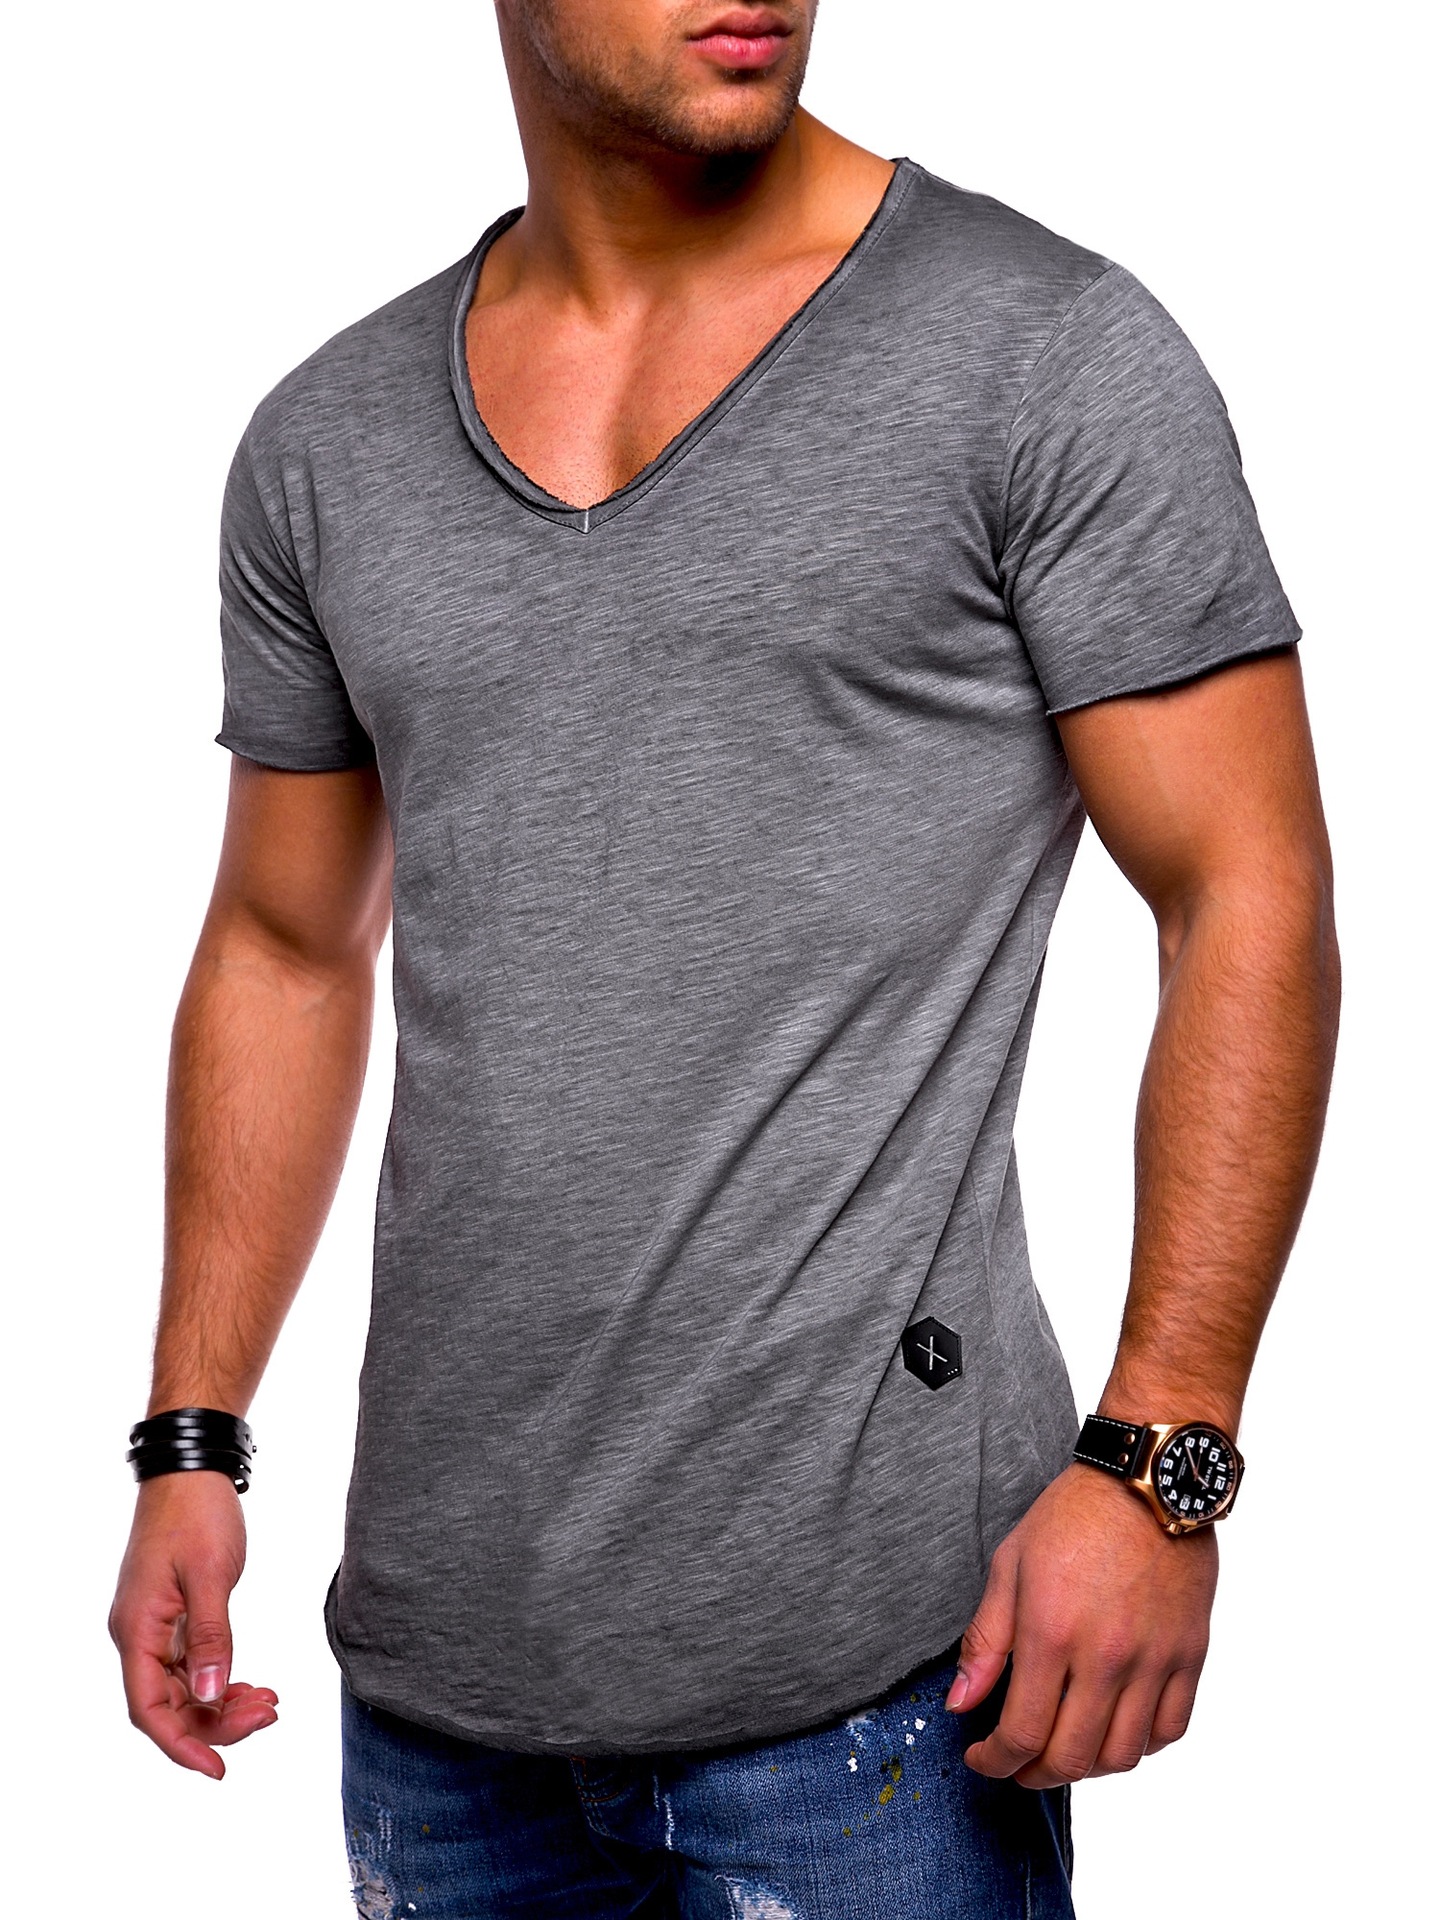 Men T-shirts Deep Neck Short Sleeve Slim Fit Basic Tees Summer T Shirt Tops Tee